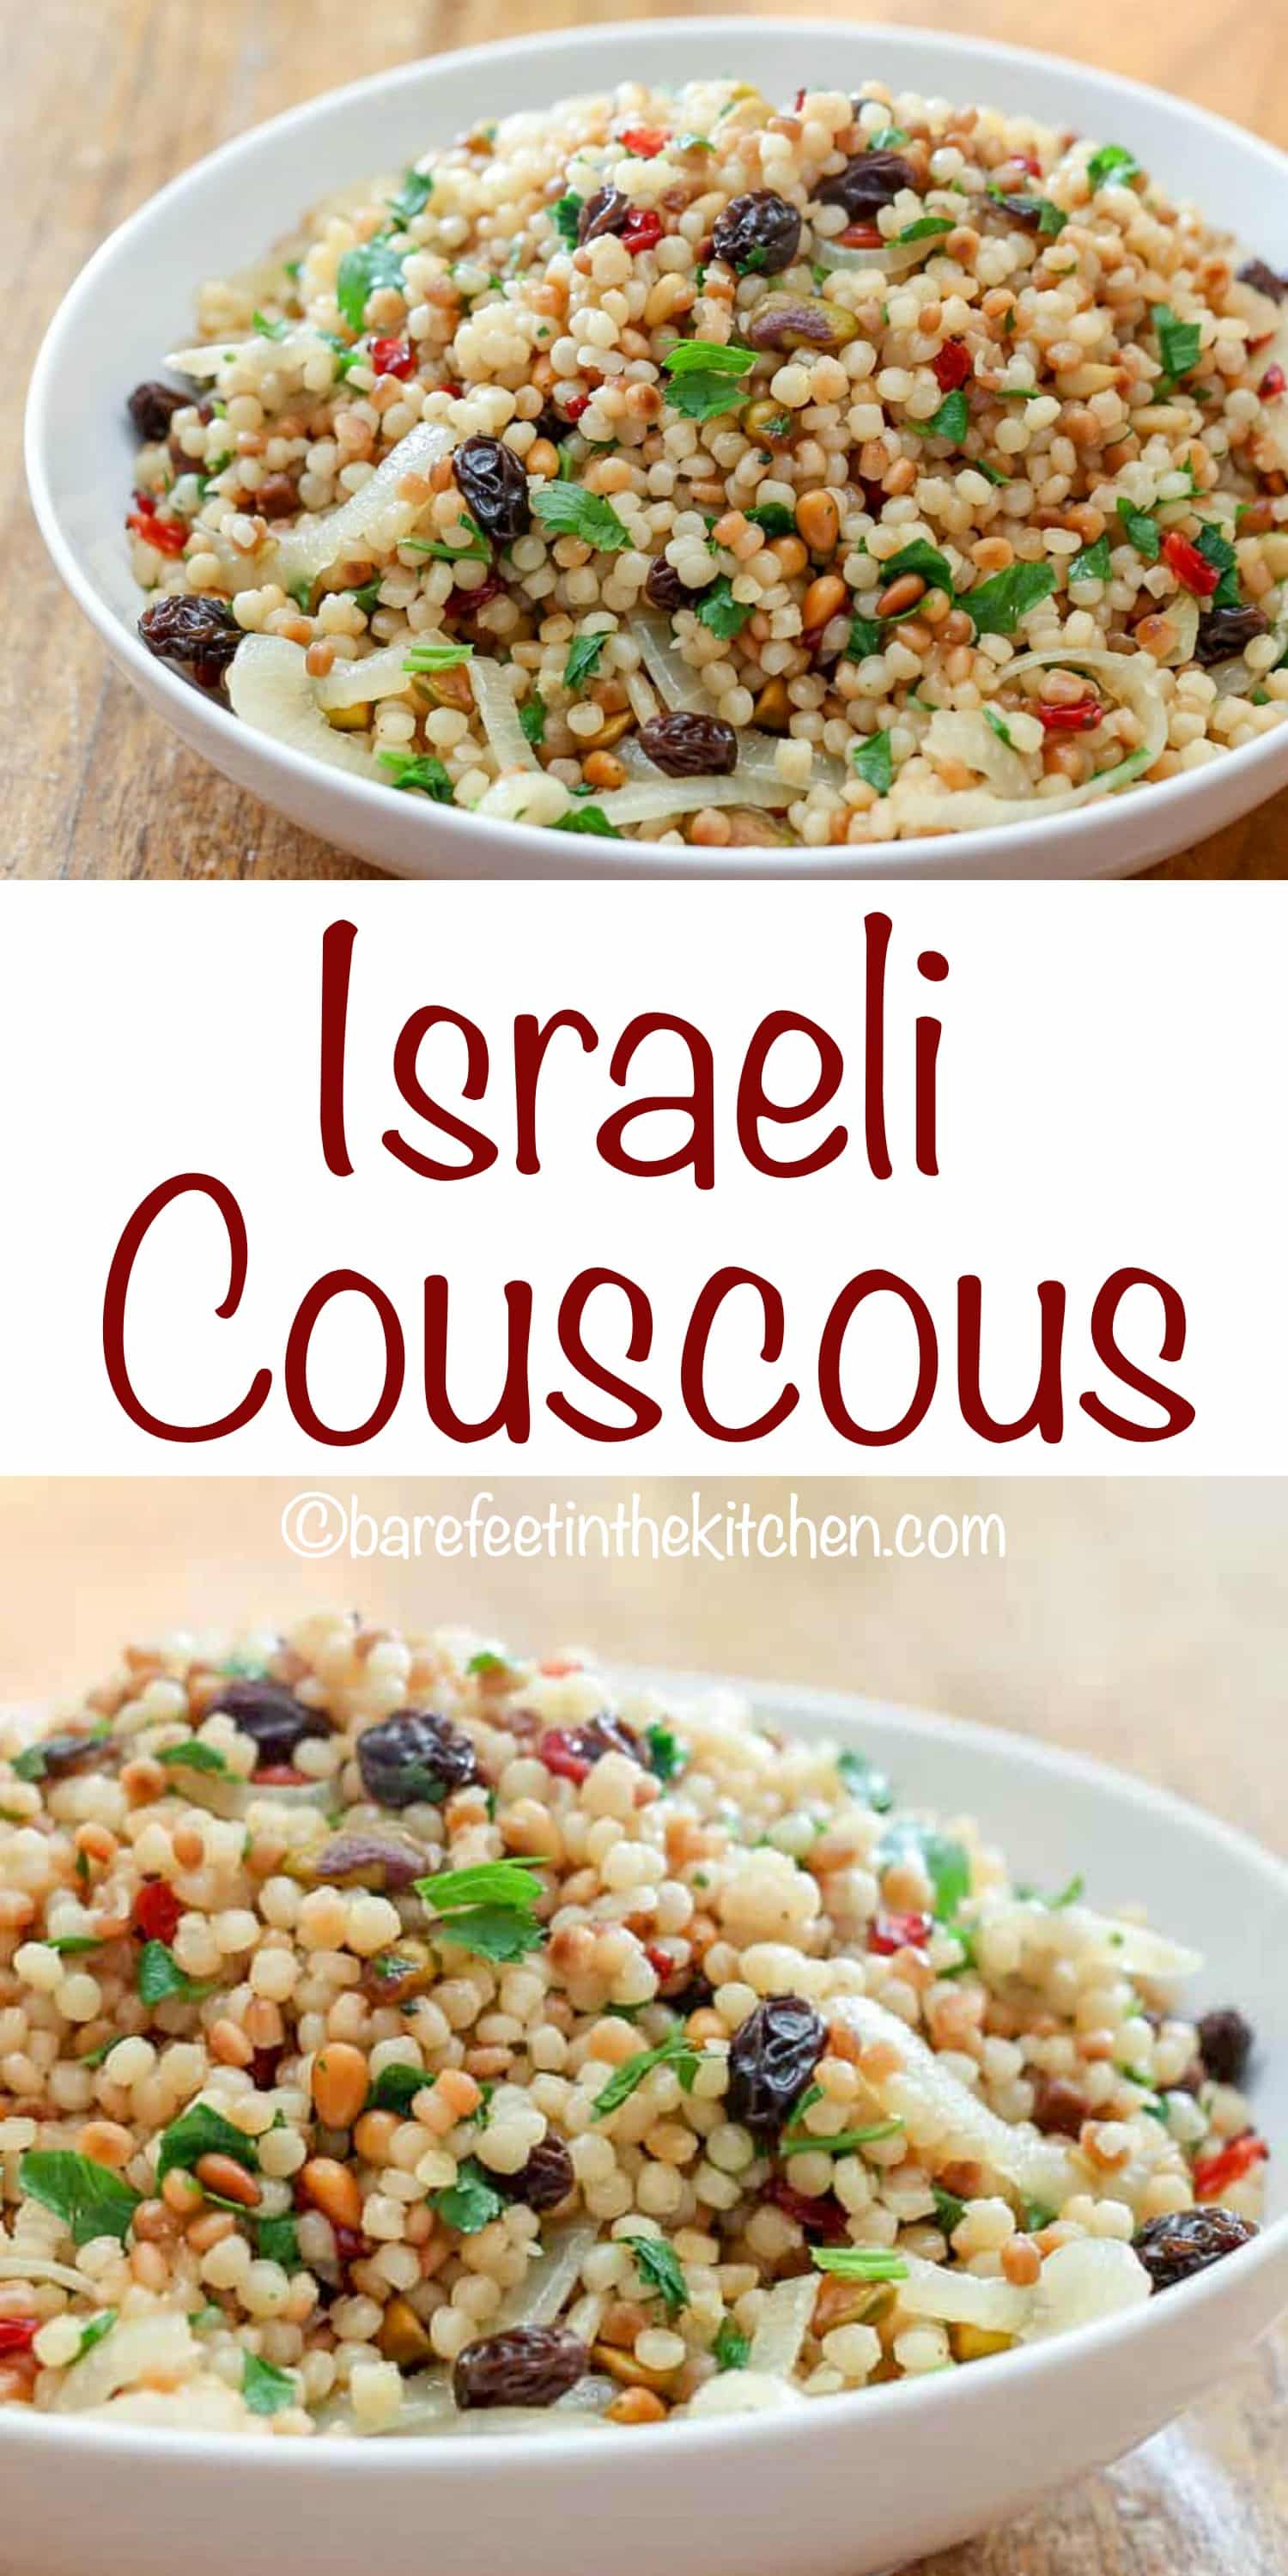 Israeli Couscous Barefeet In The Kitchen